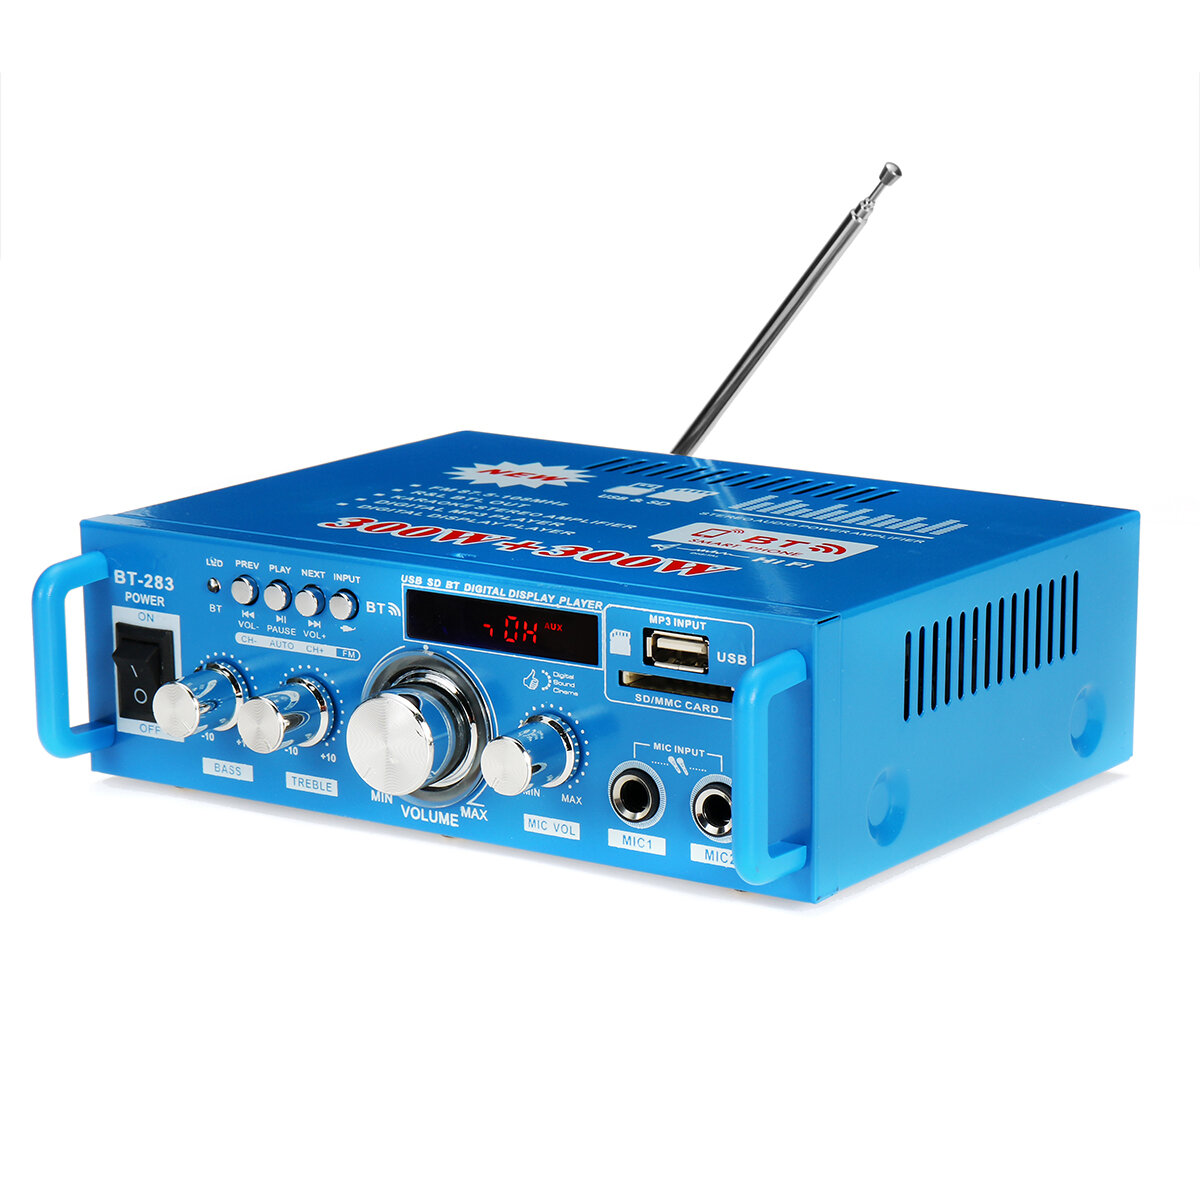 

12V 220V HIFI Audio Stereo MP3 Player Power Amplifier bluetooth FM Radio 2CH 600W Support FM USB SD Slot Europe Plug For